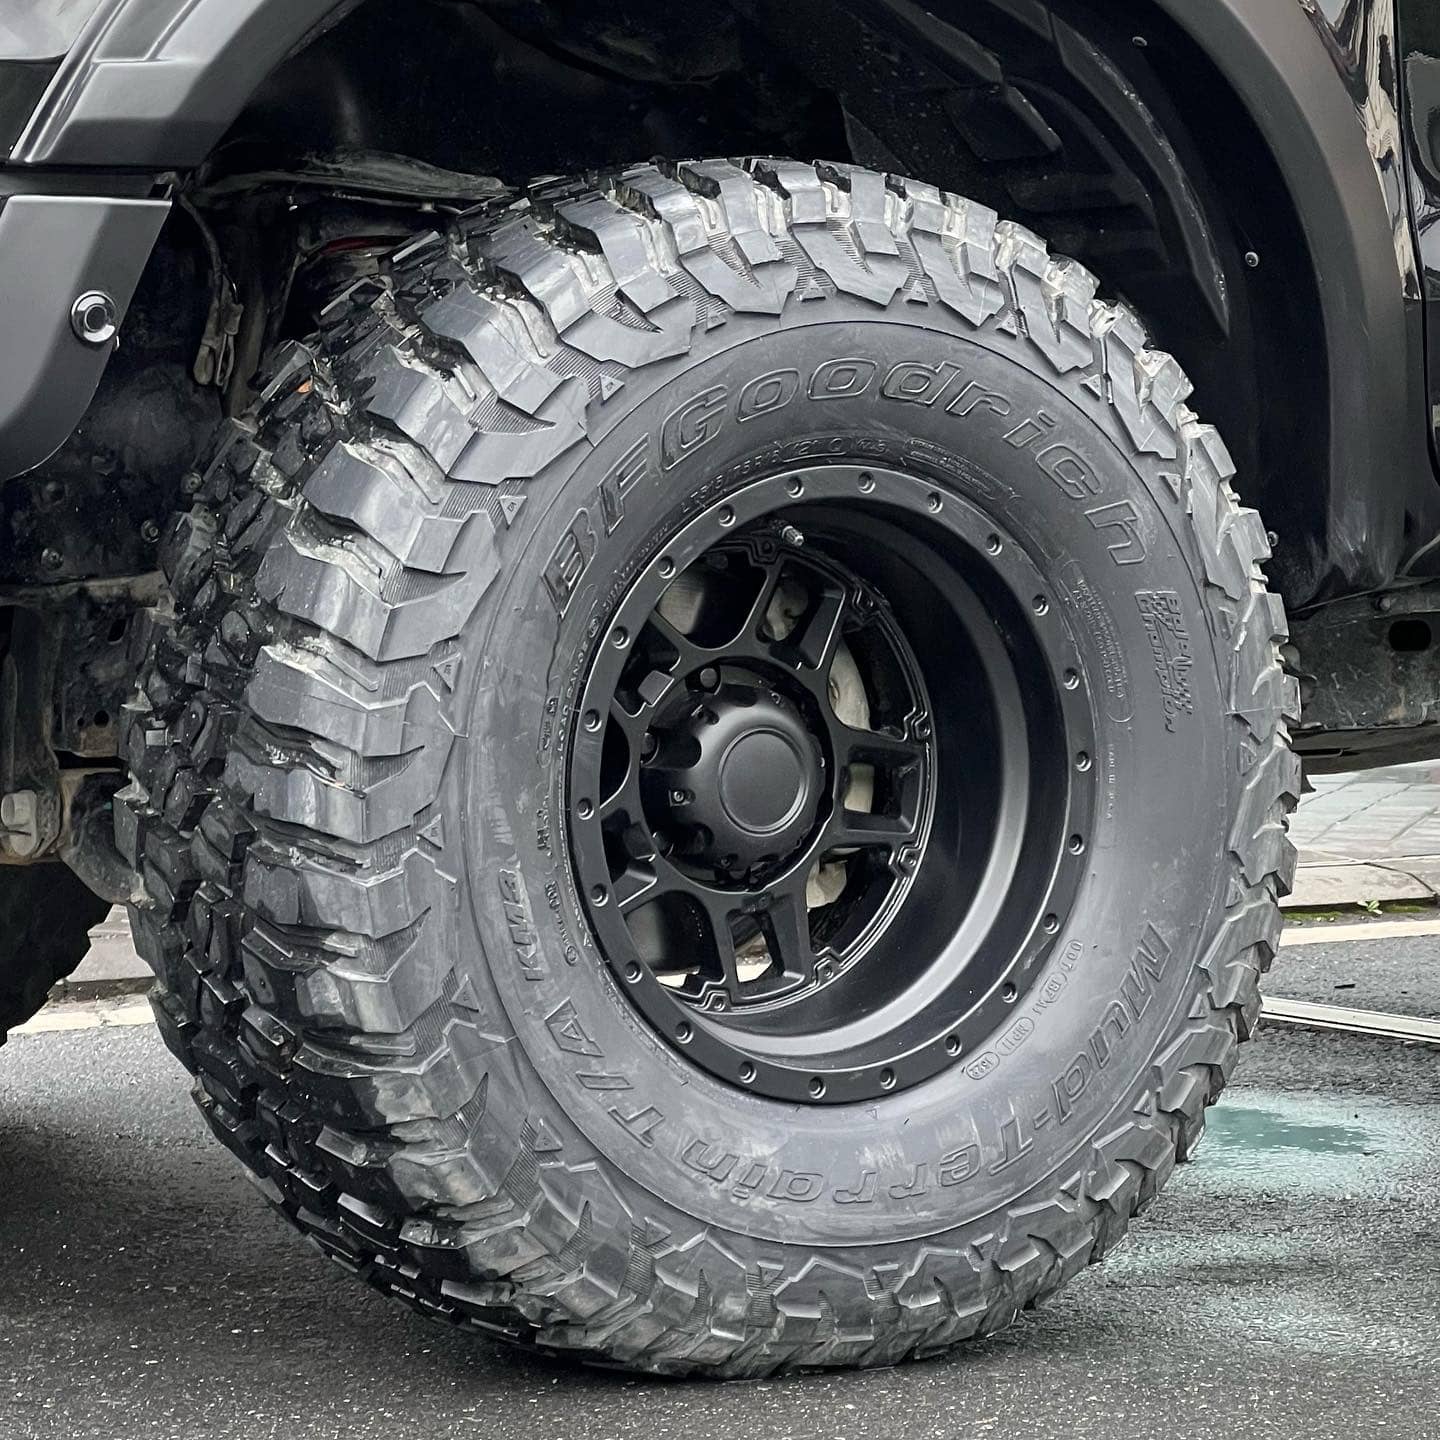 35" inch 315/75R16 BF Goodrich KM3 Tires16” Offroad Wheels 